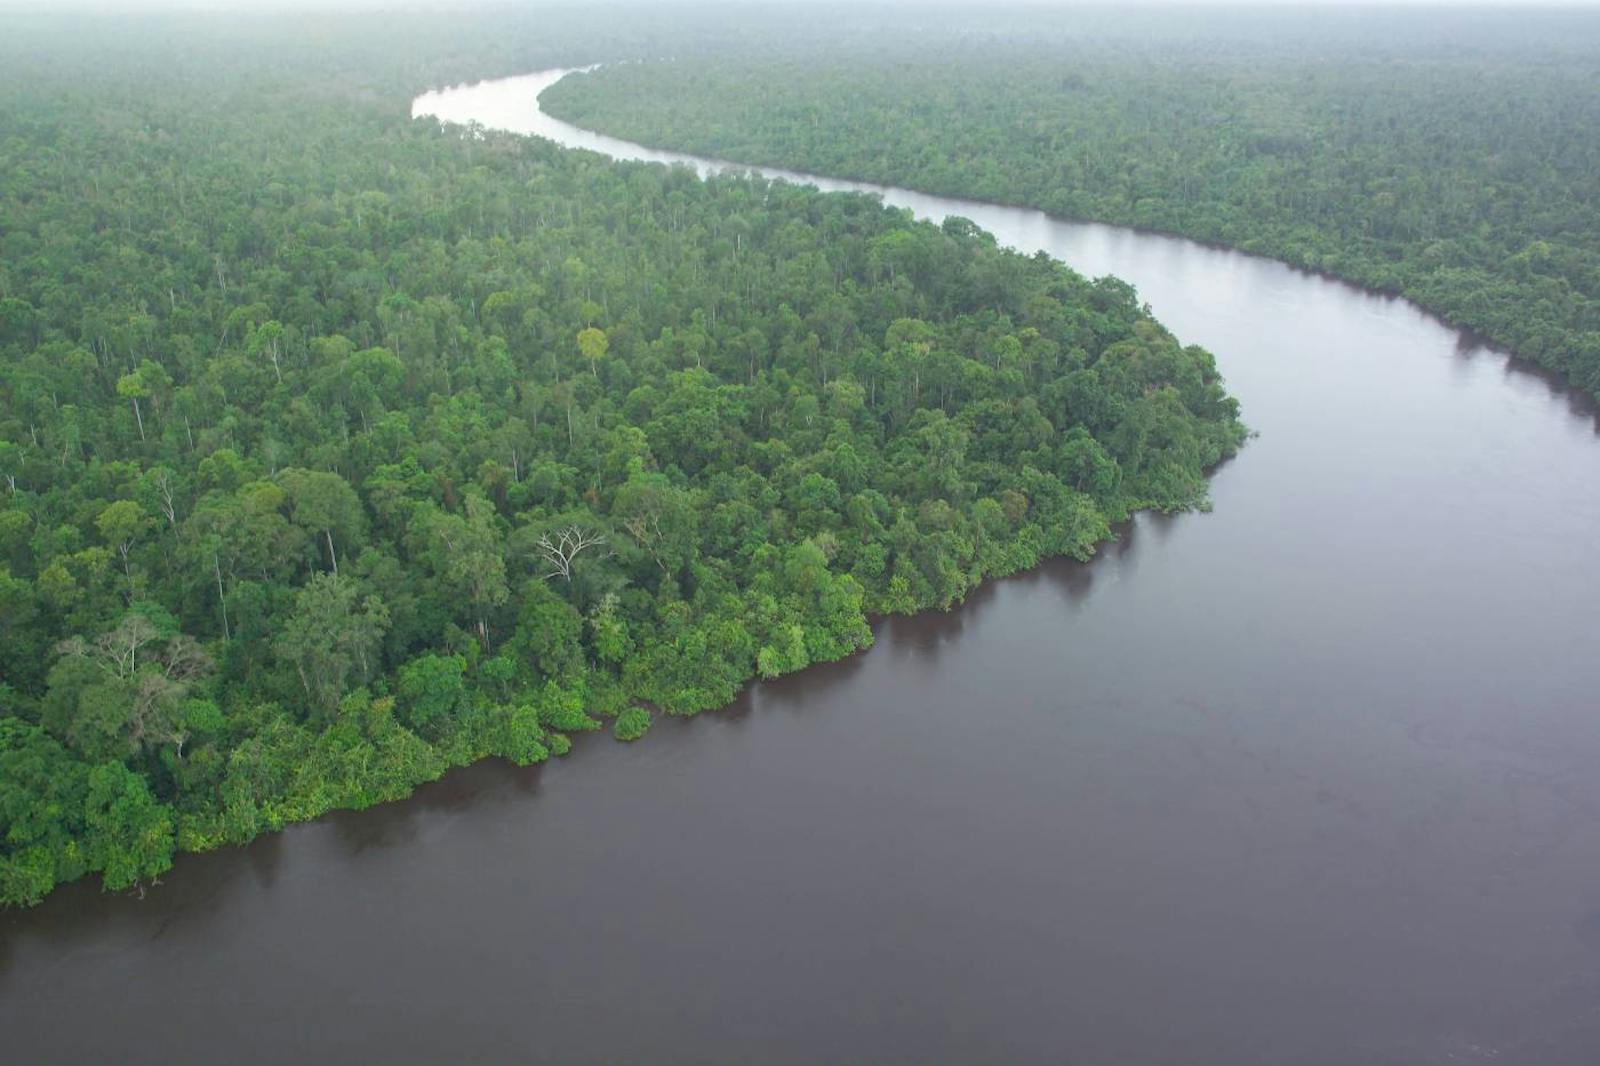 Borneo Peat Swamp Forests